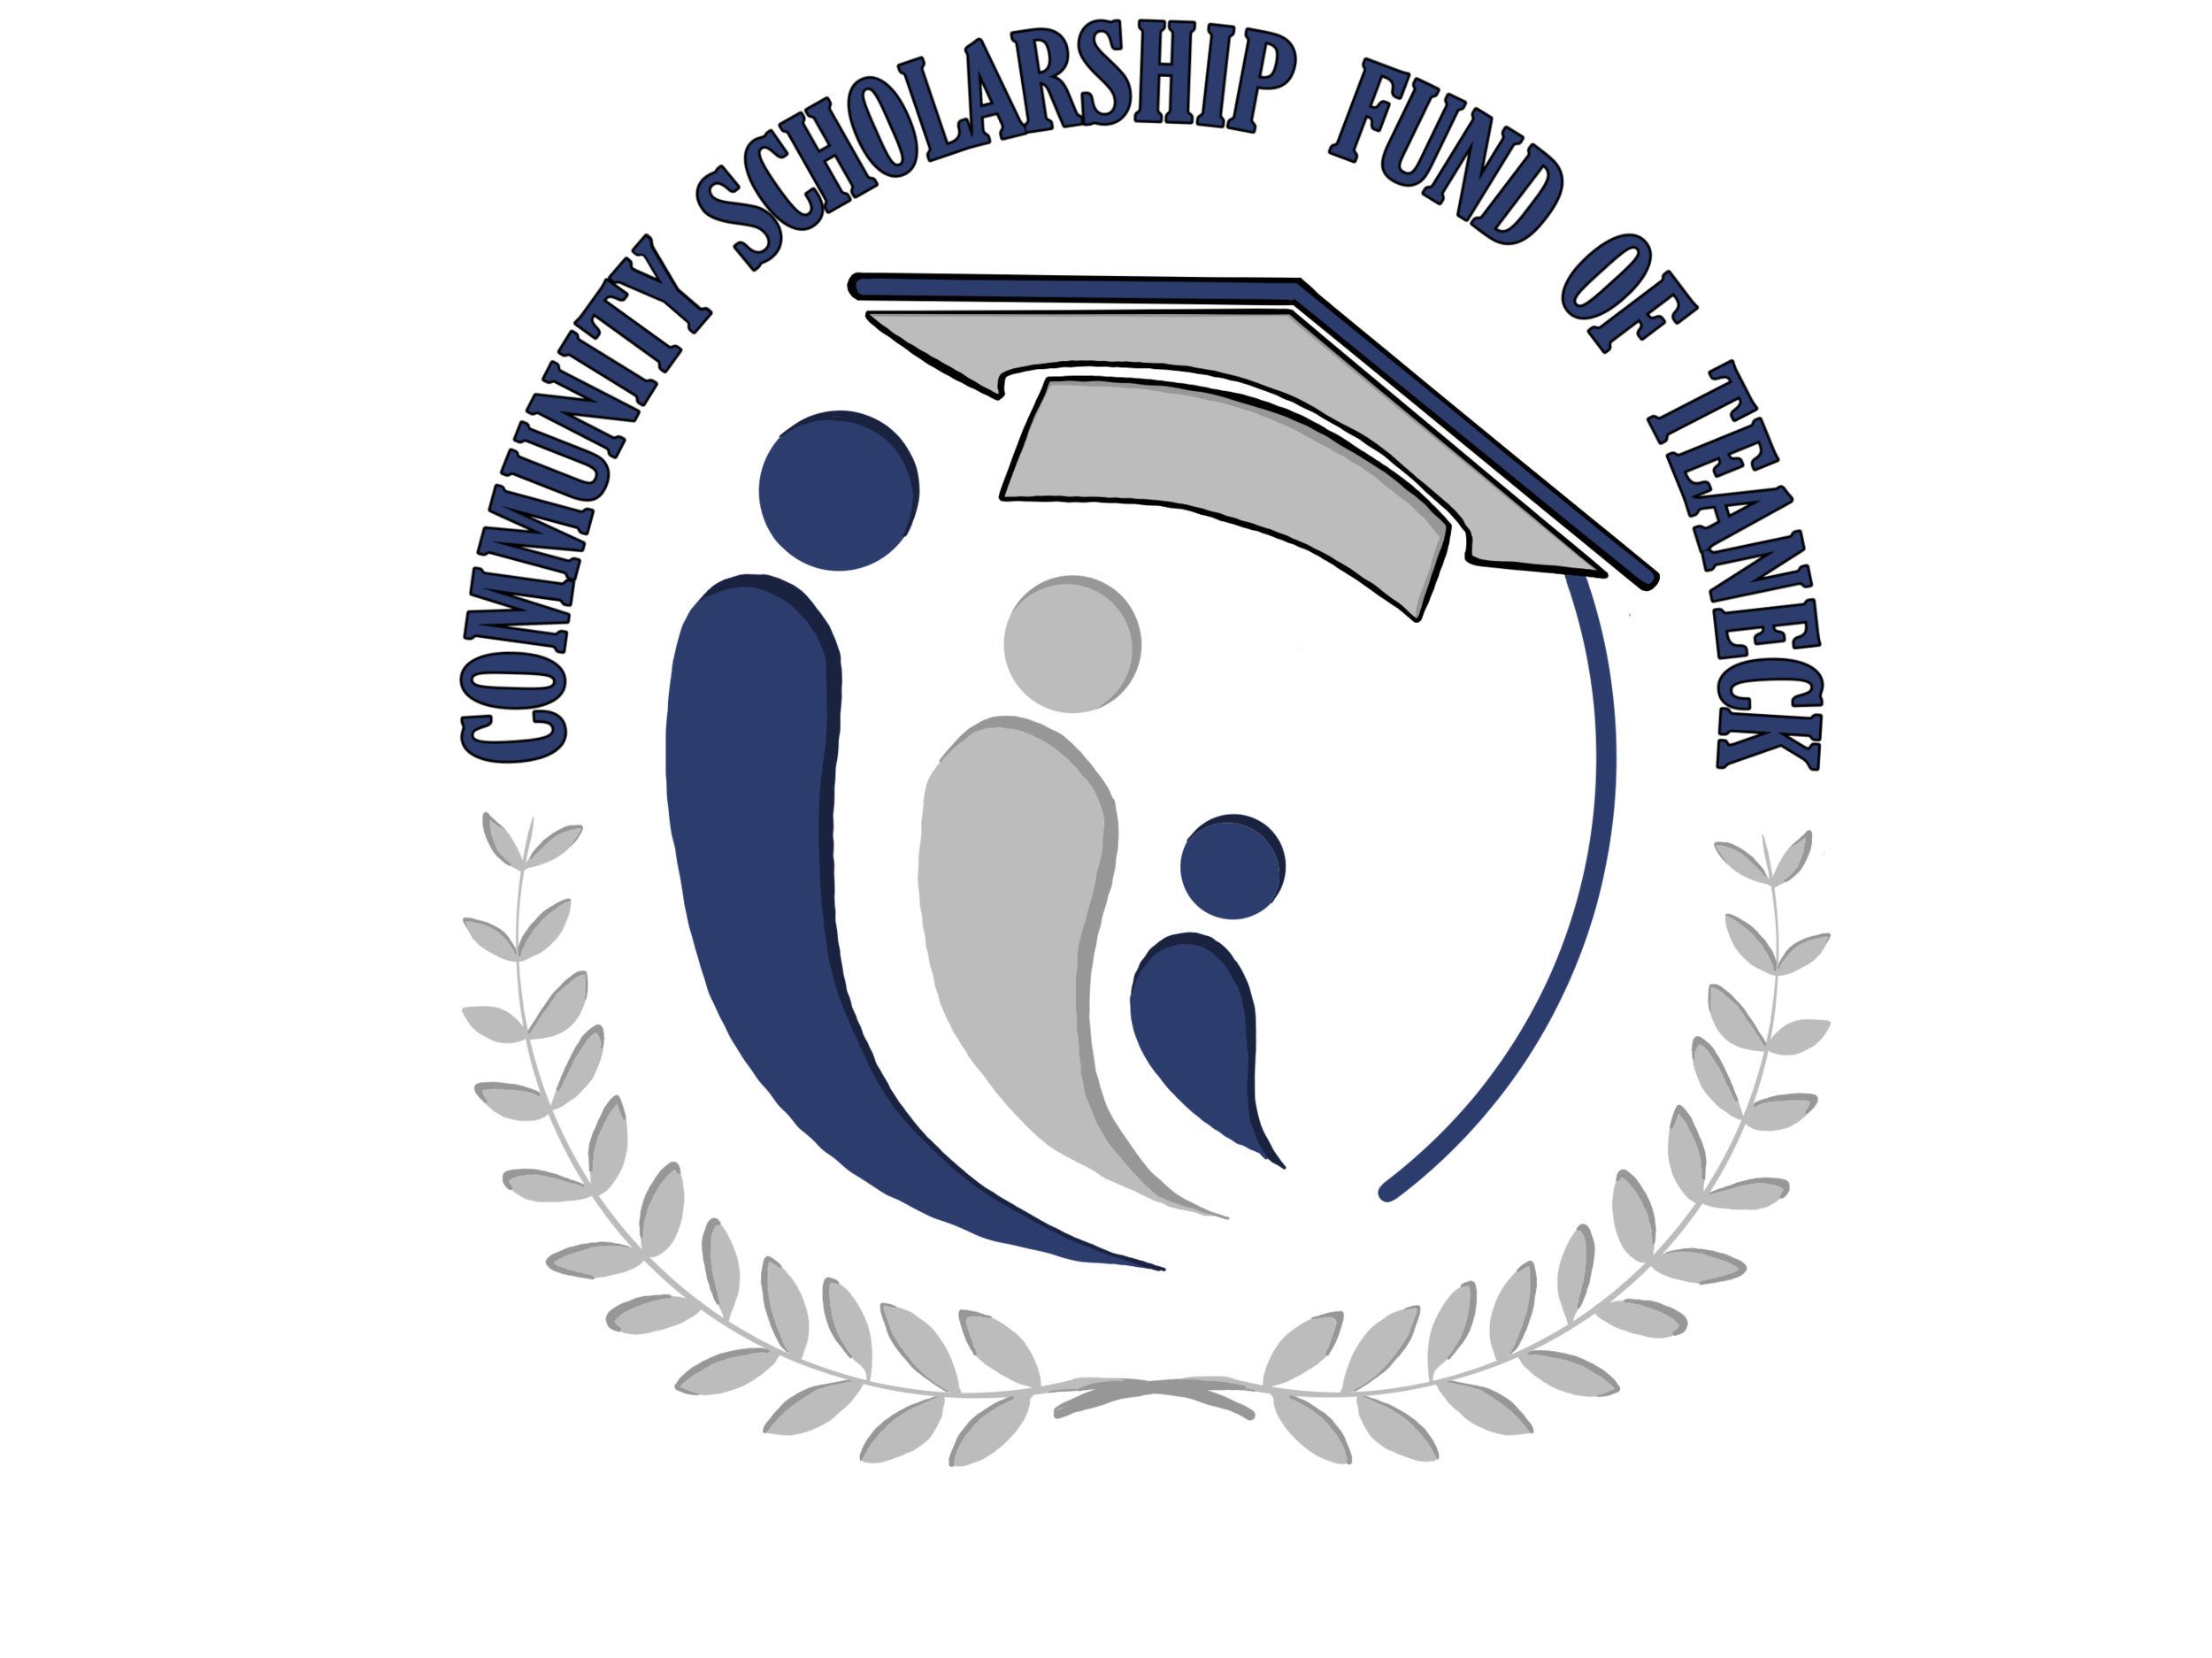 Teaneck Community Scholarship Fund